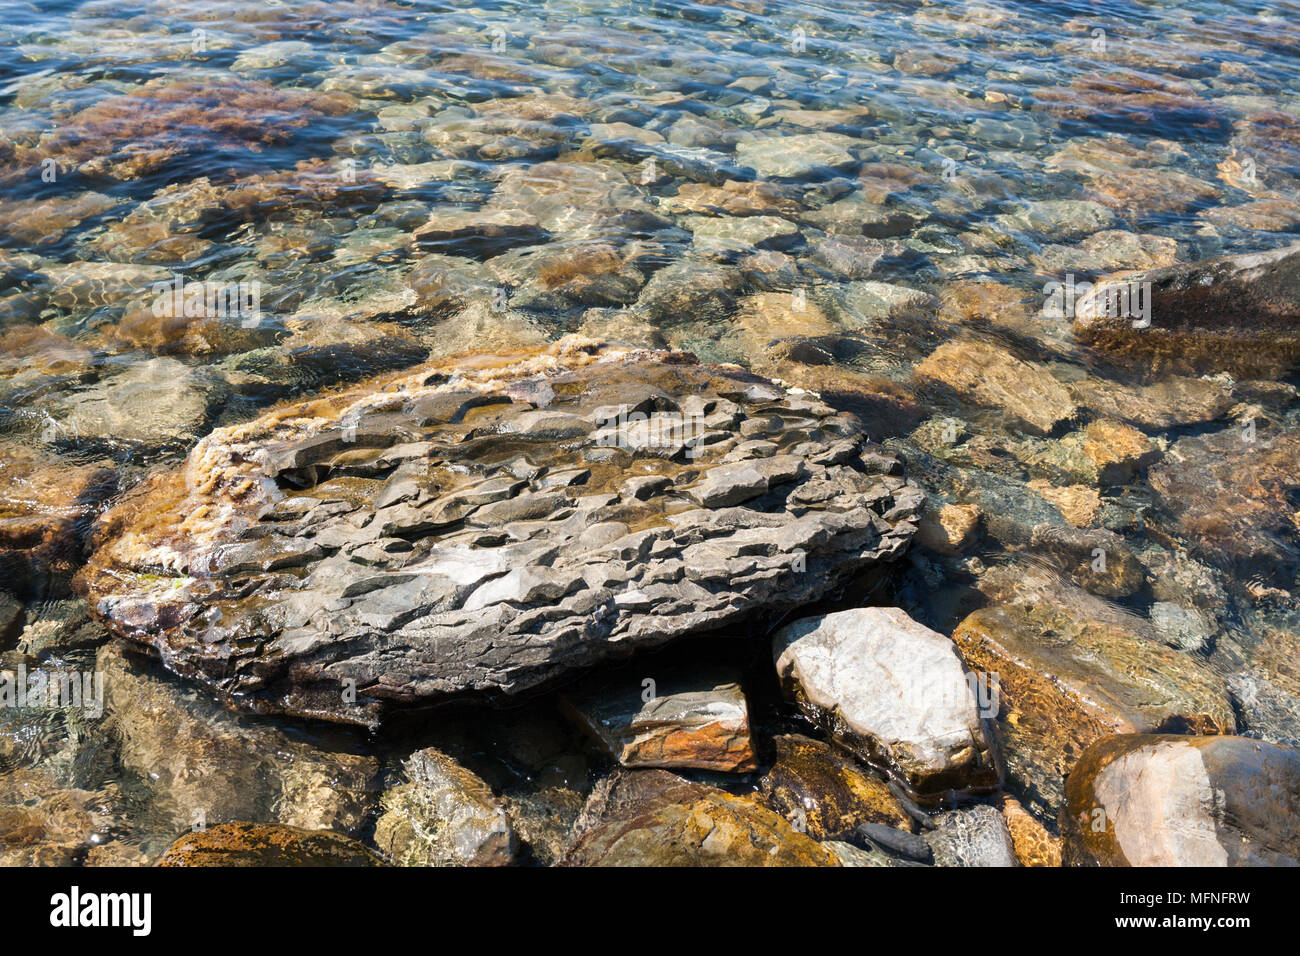 Big flat rock hi-res stock photography and images - Alamy